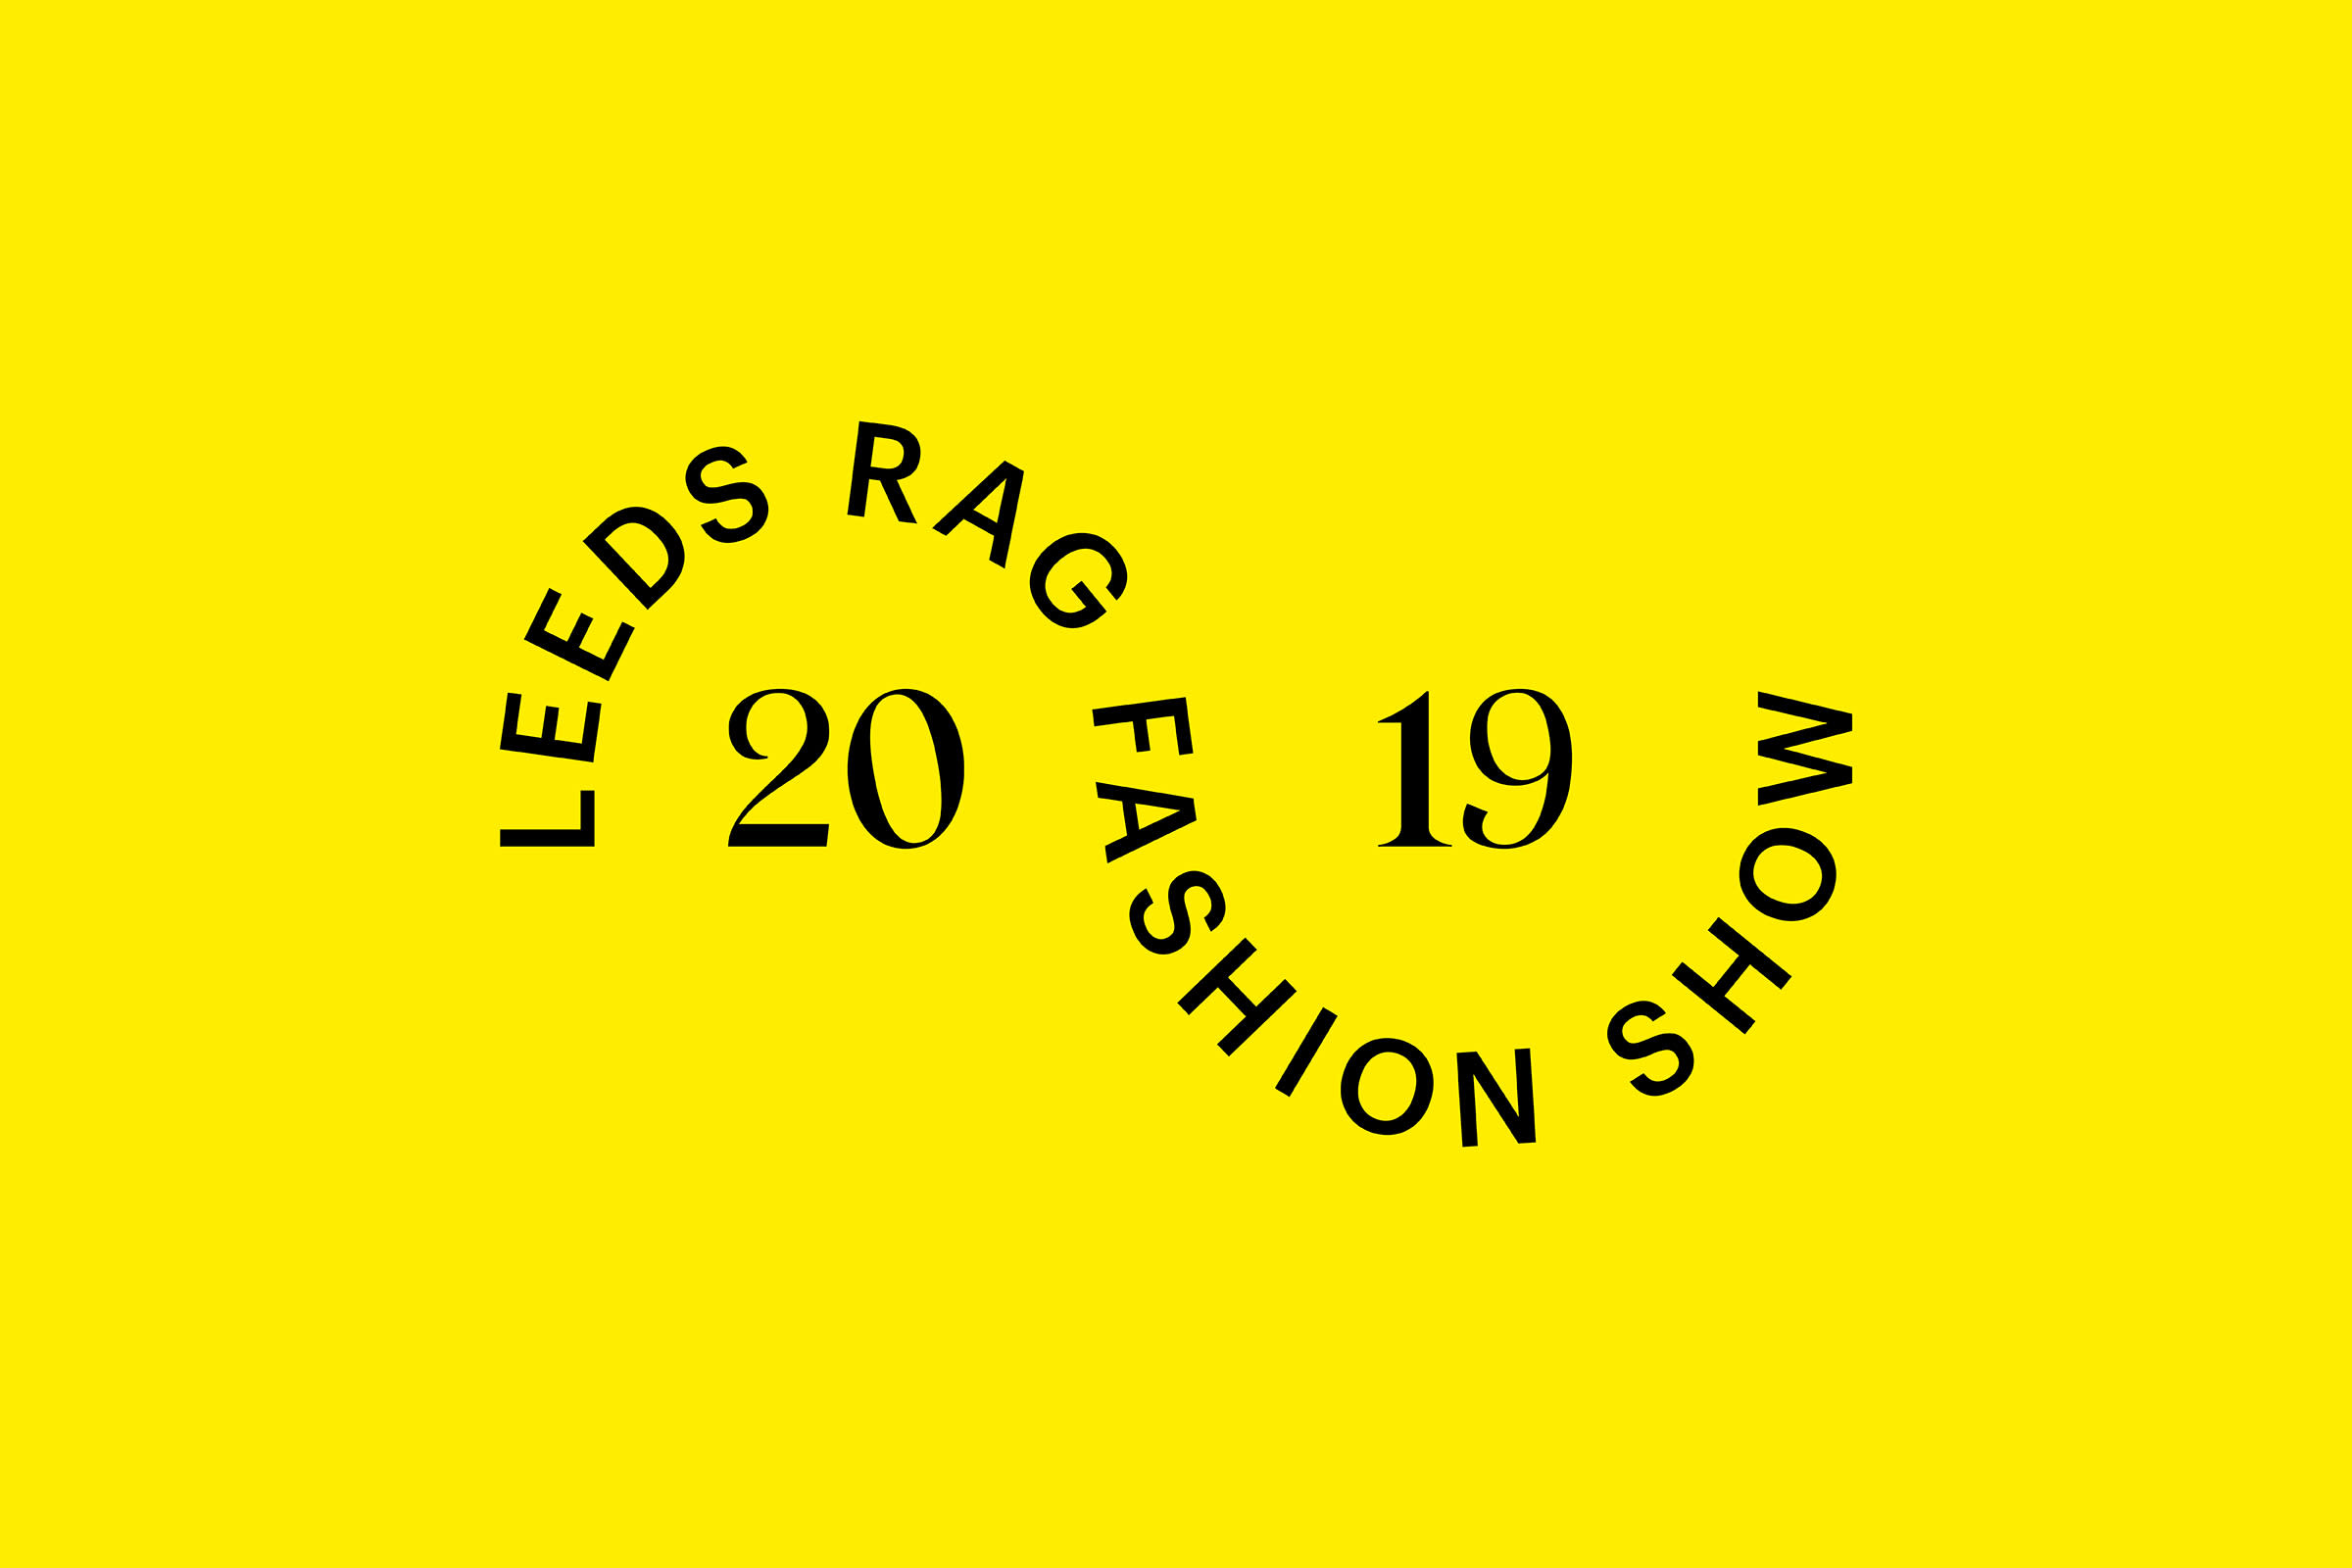 saul studio — Leeds RAG Fashion Show 2019